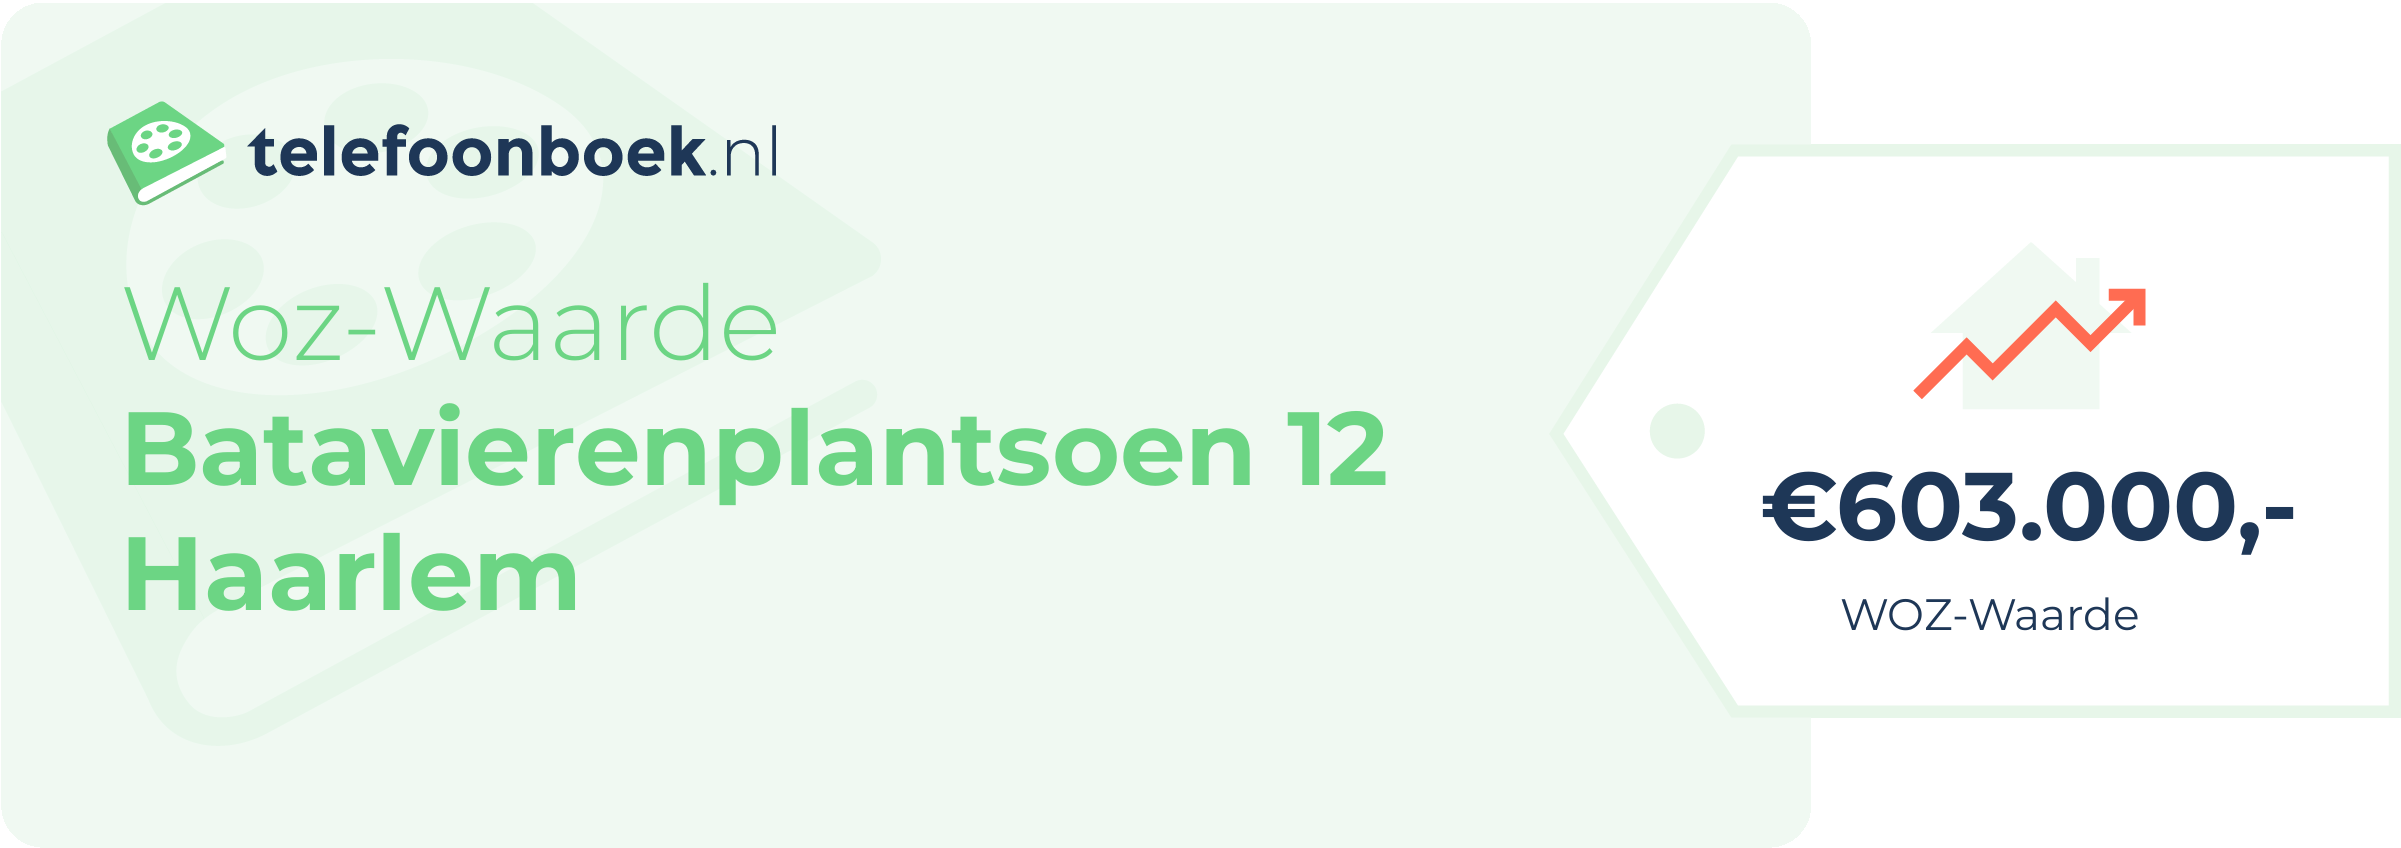 WOZ-waarde Batavierenplantsoen 12 Haarlem